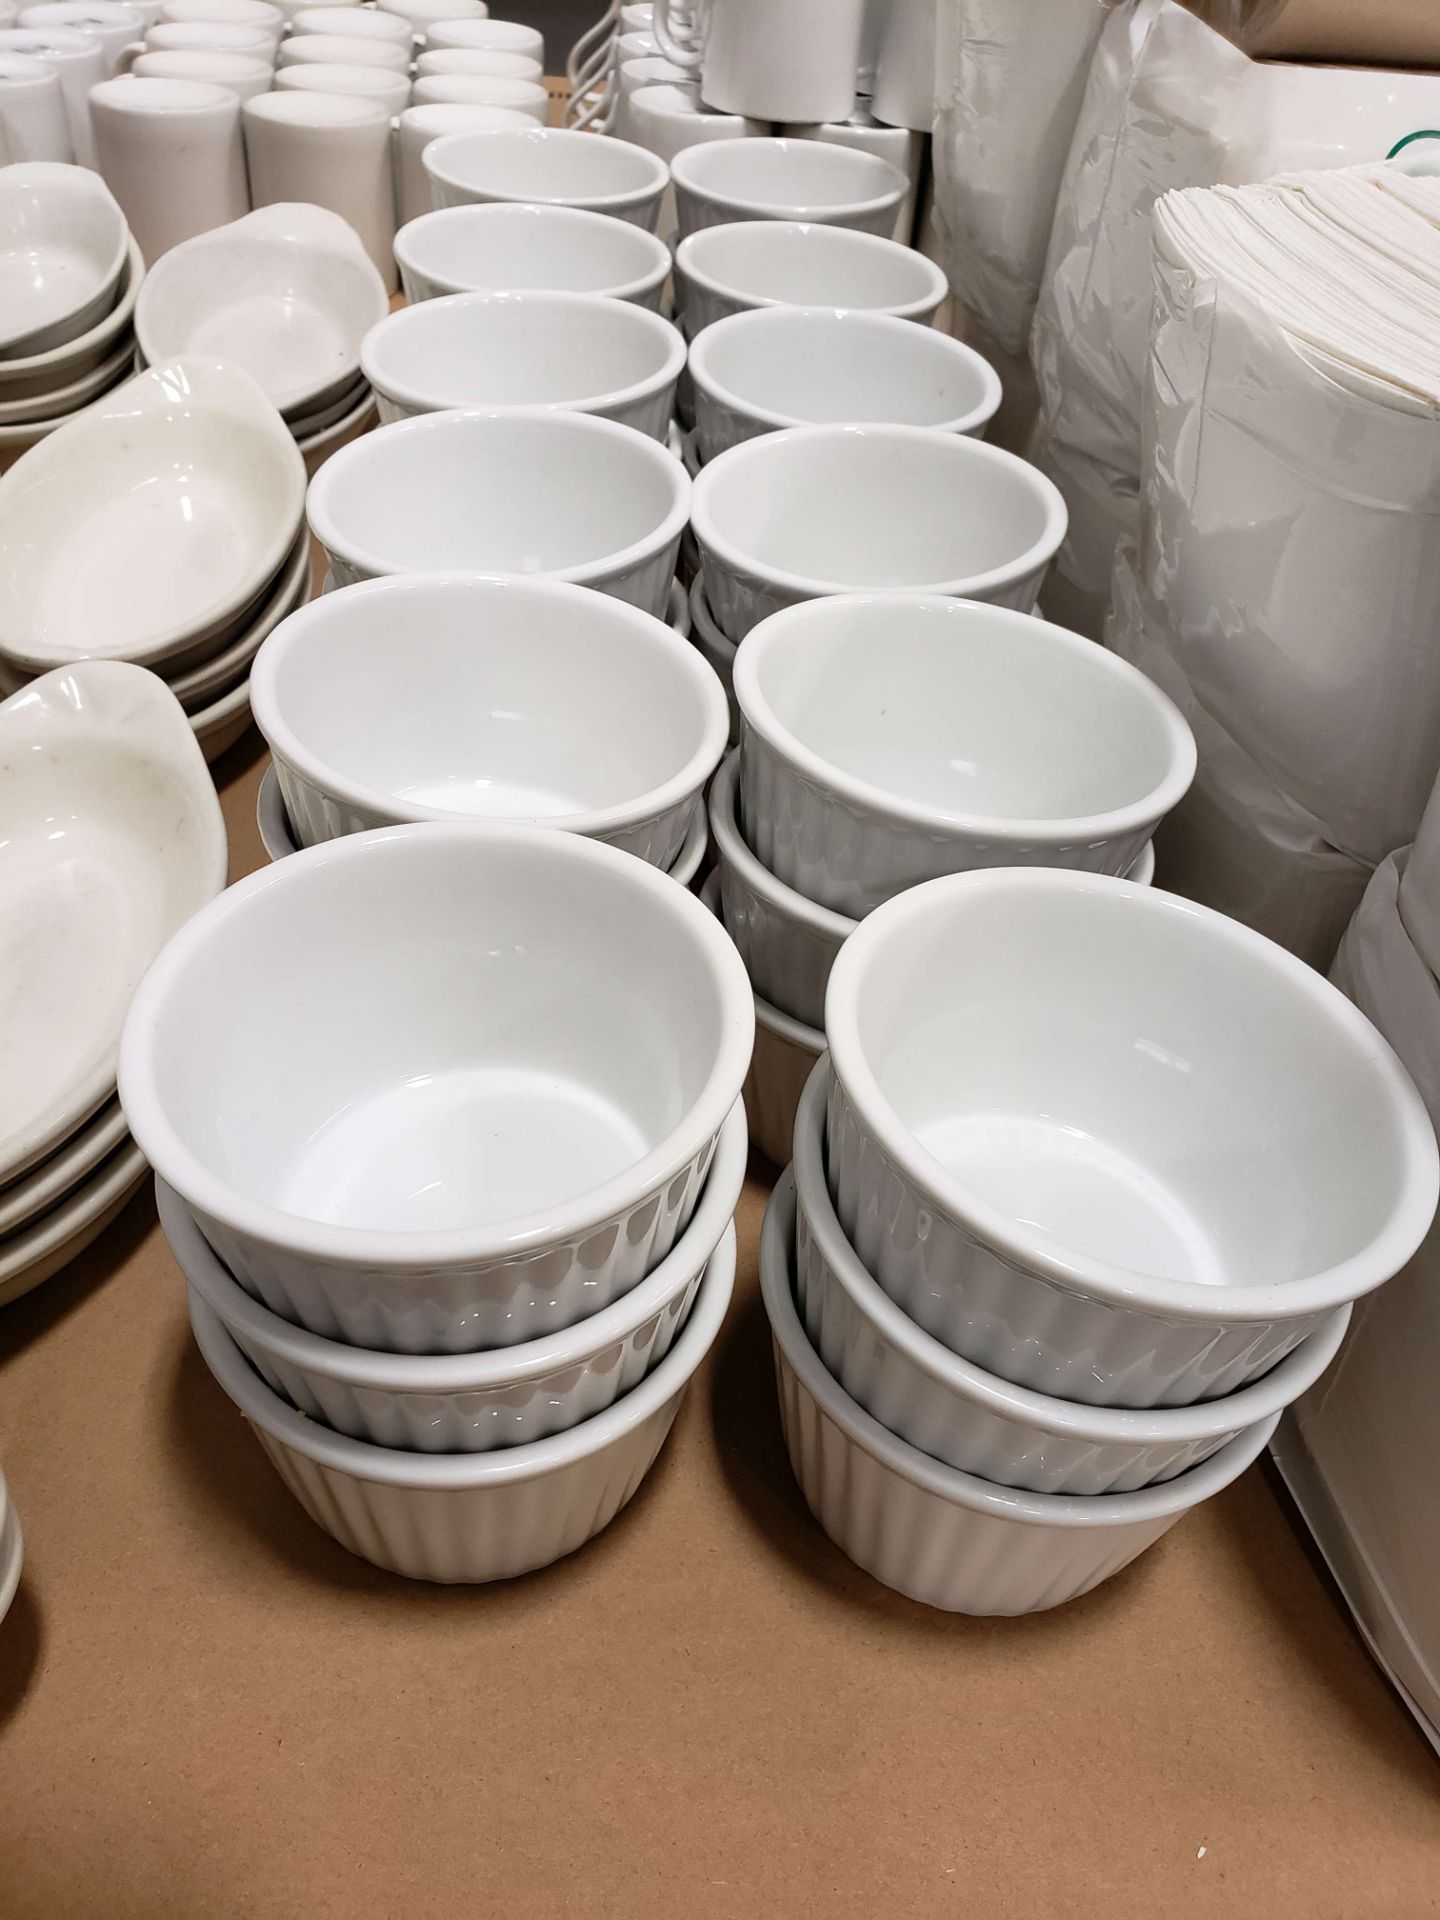 5 oz Ceramic White Ramekins - Lot of 36 - Image 2 of 2